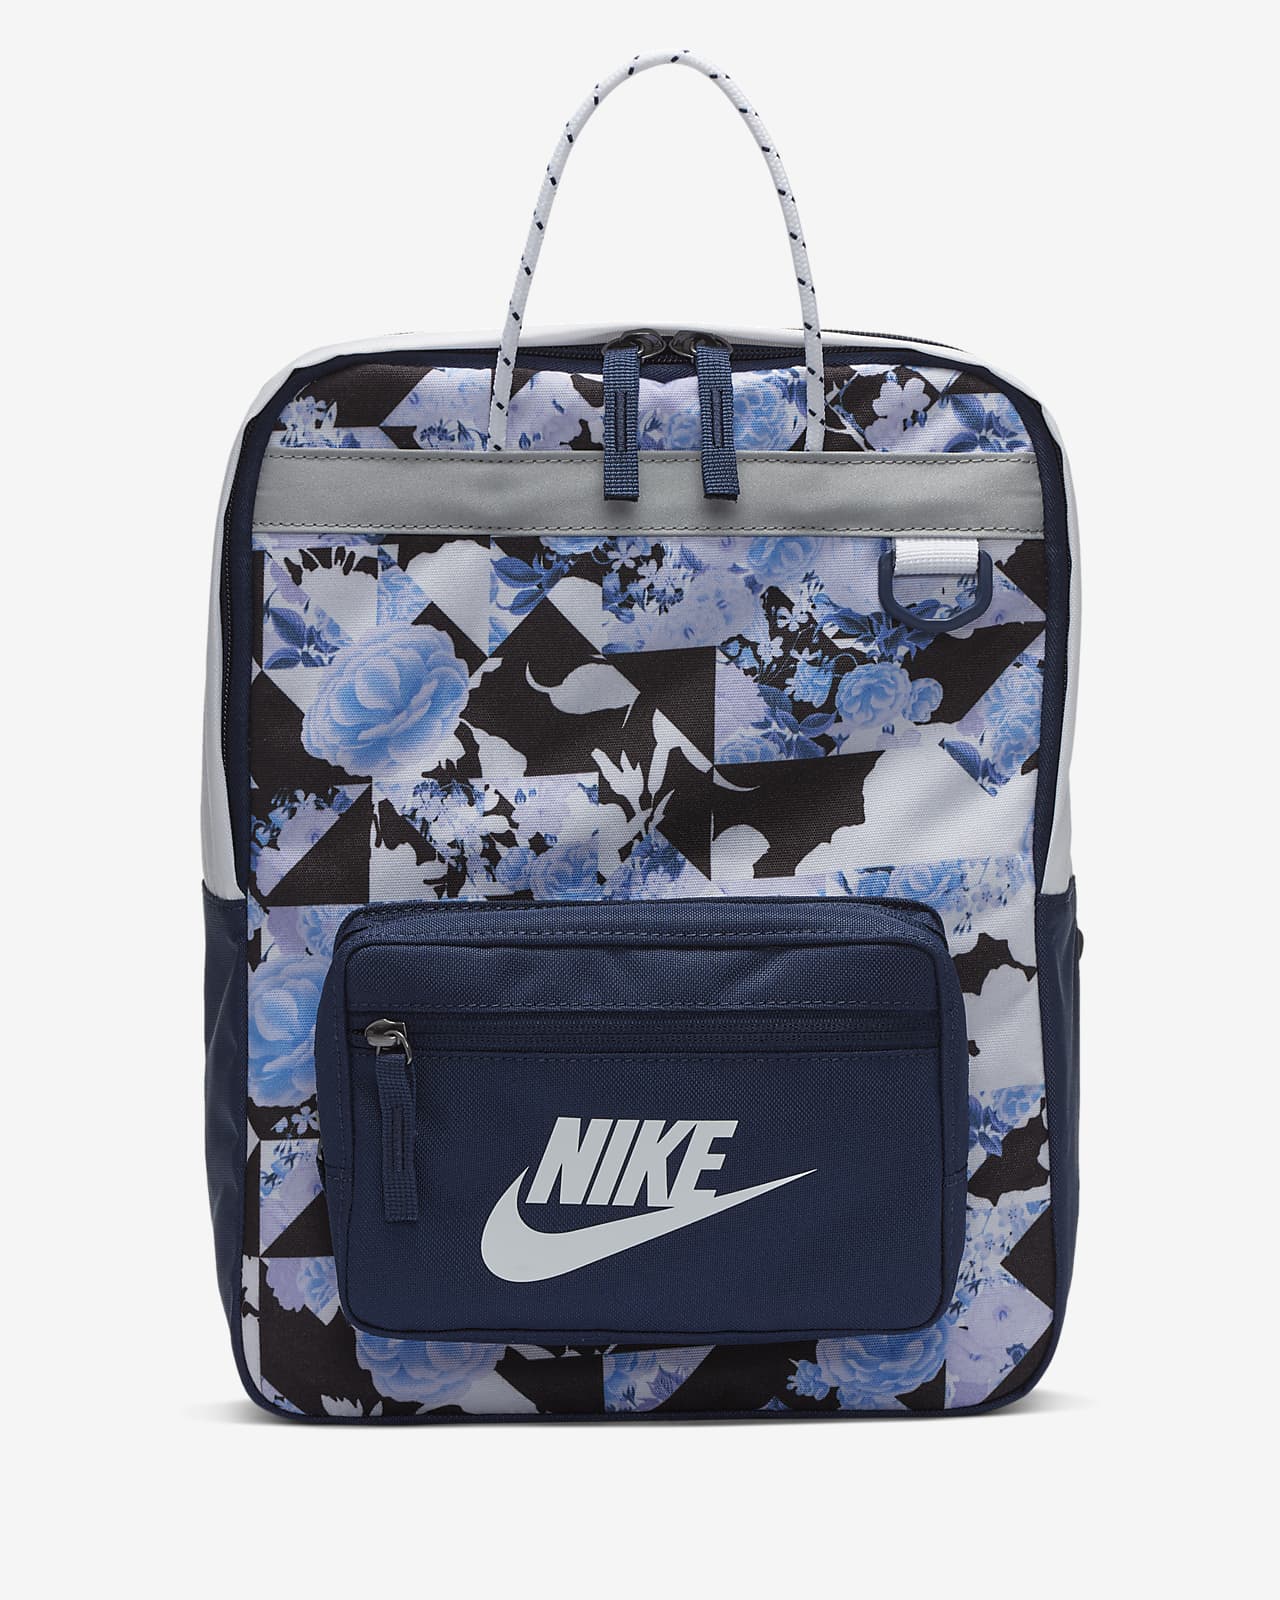 nike soccer bags customized